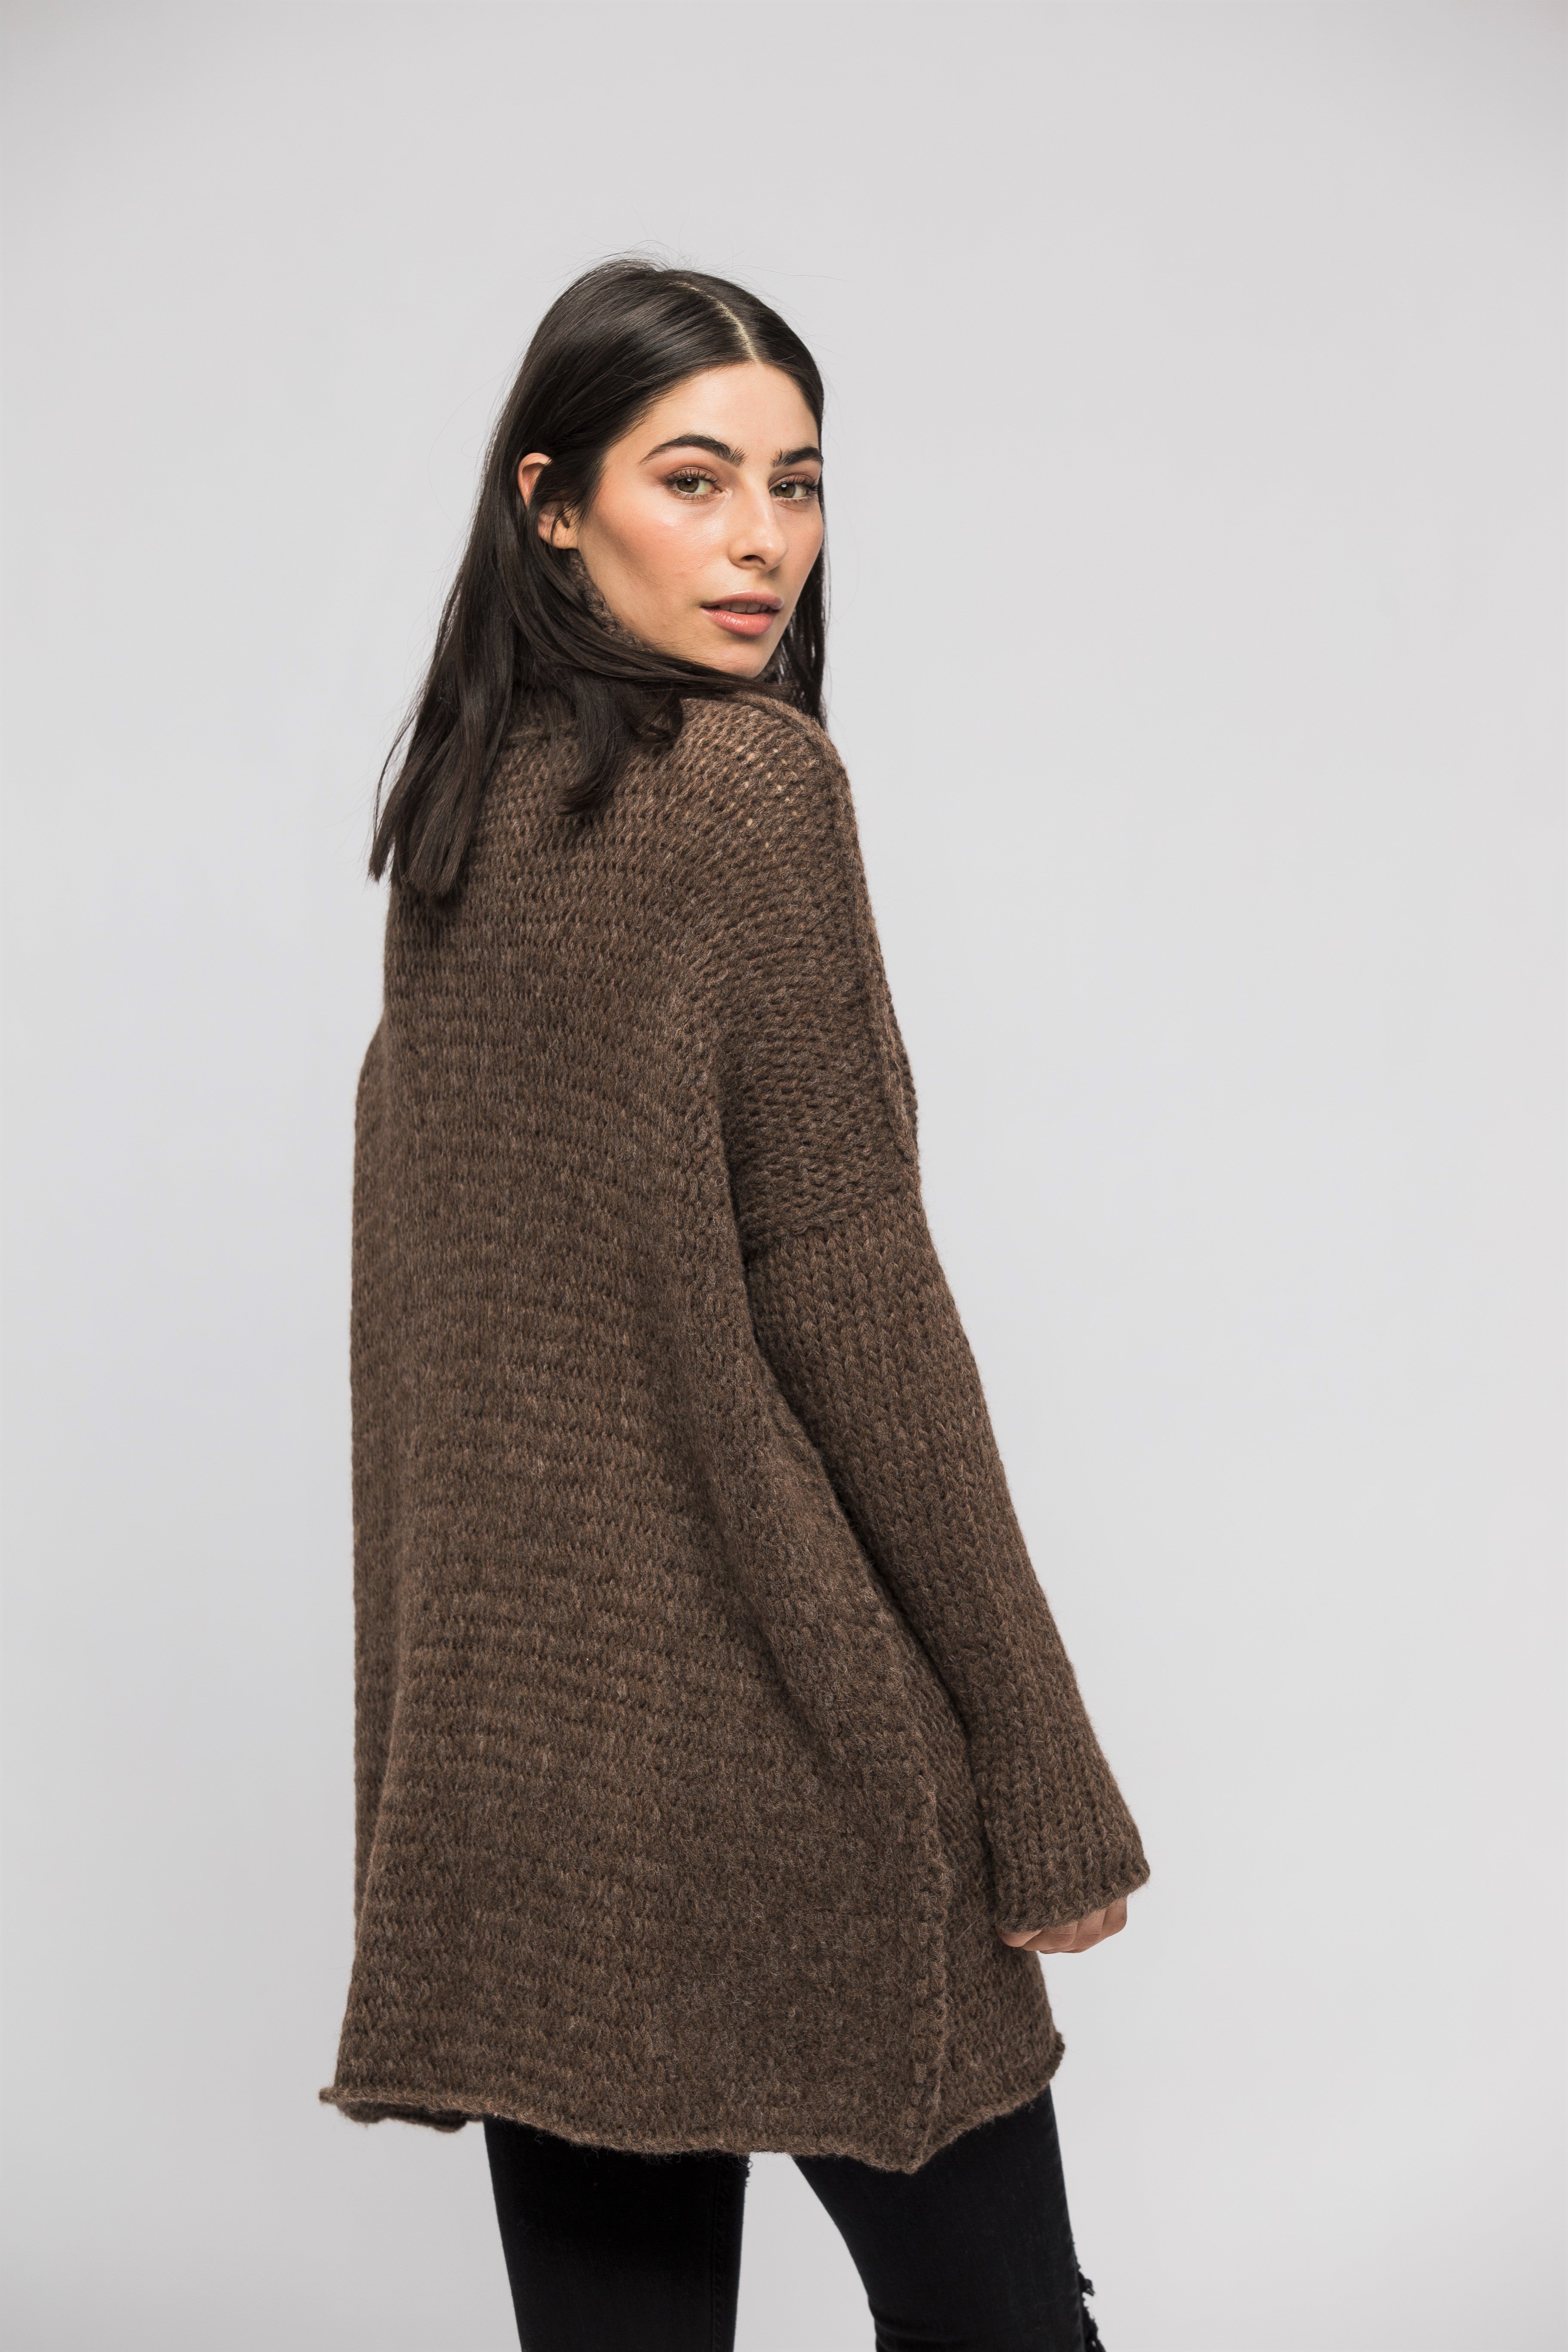 Brown Alpaca oversized woman knit sweater.